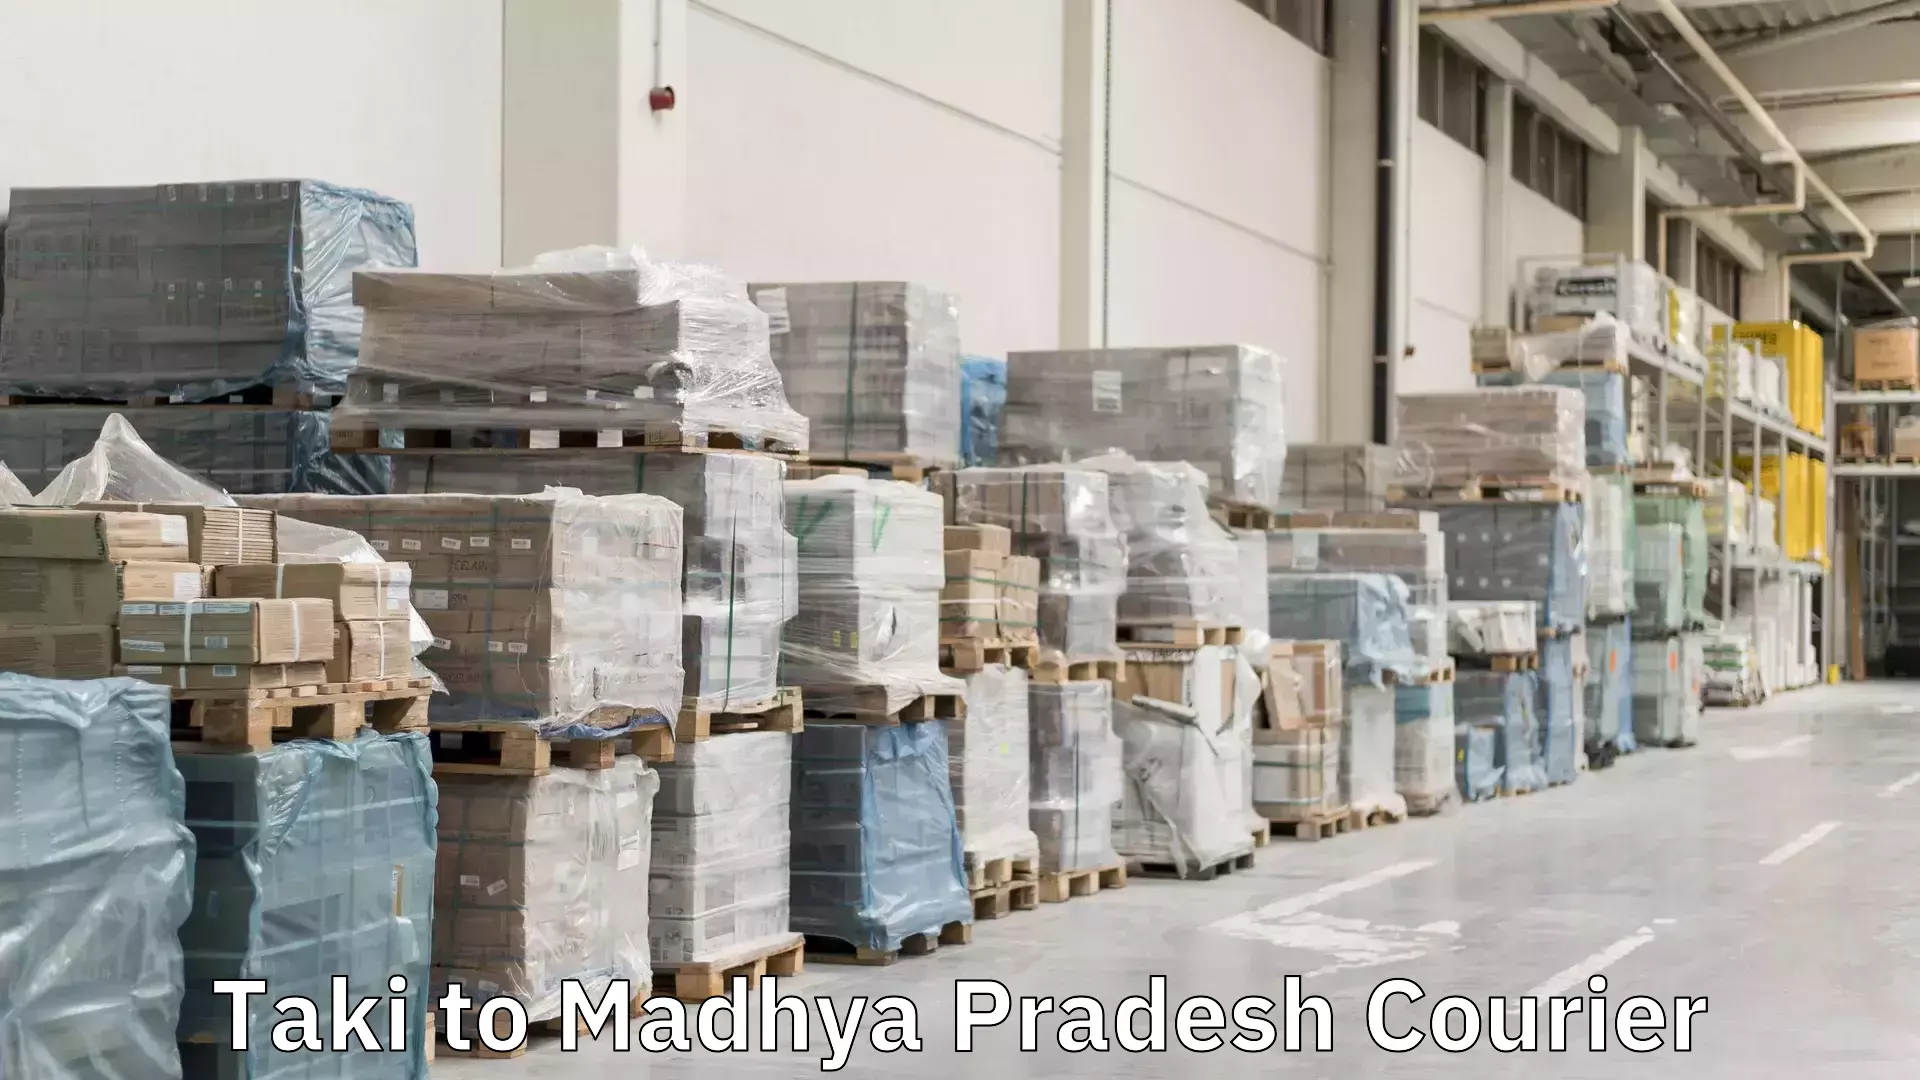 Speedy delivery service Taki to Madhya Pradesh